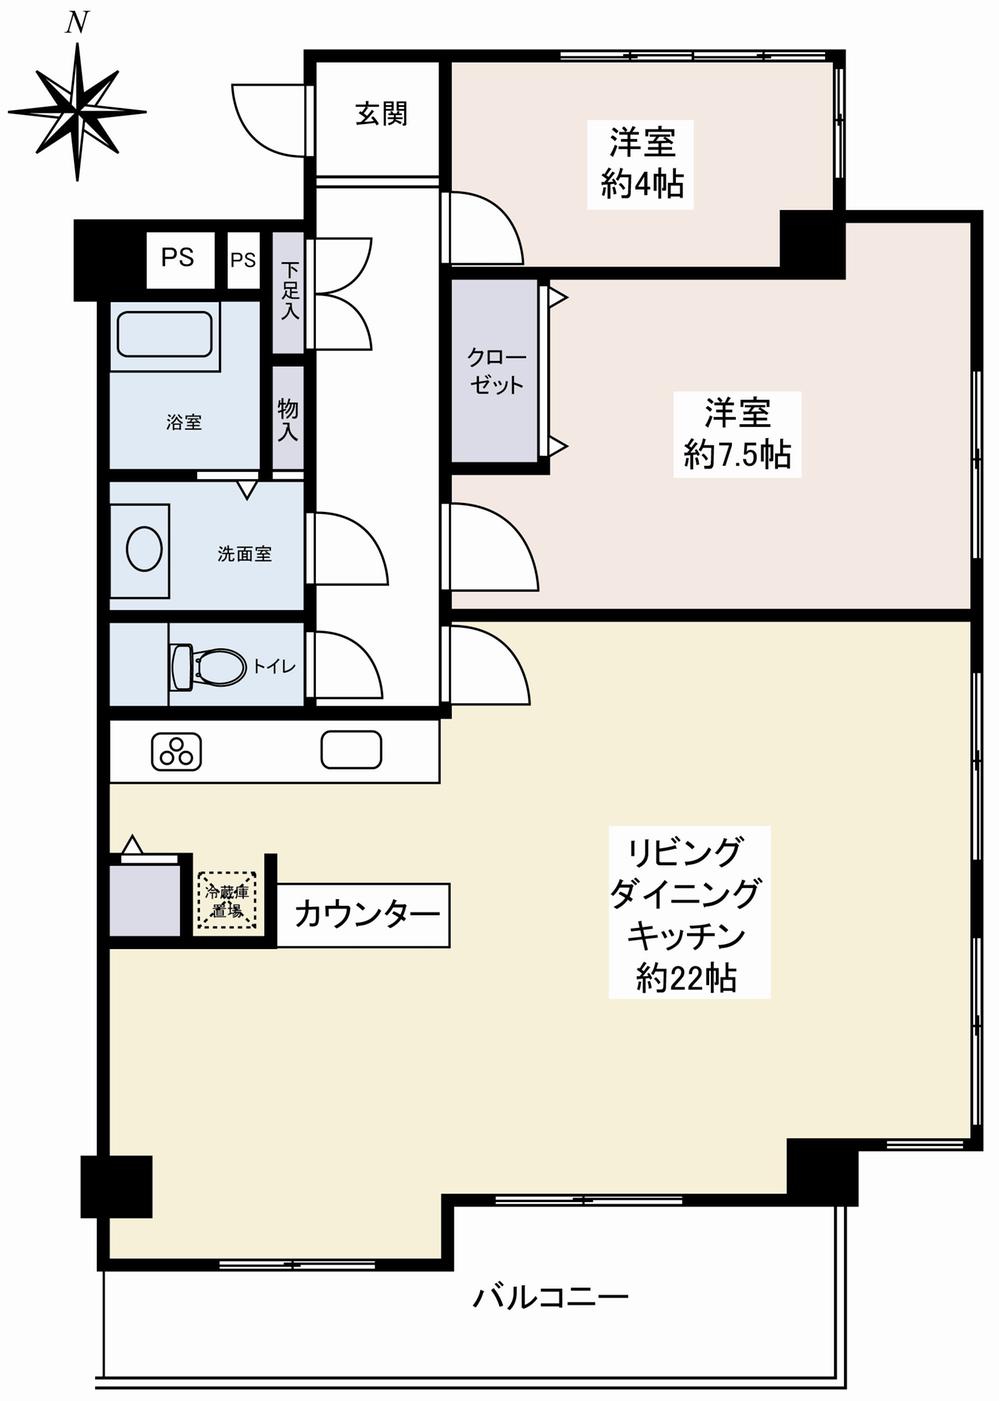 Floor plan. 2LDK, Price 29,700,000 yen, Occupied area 78.42 sq m , Balcony area 9.99 sq m